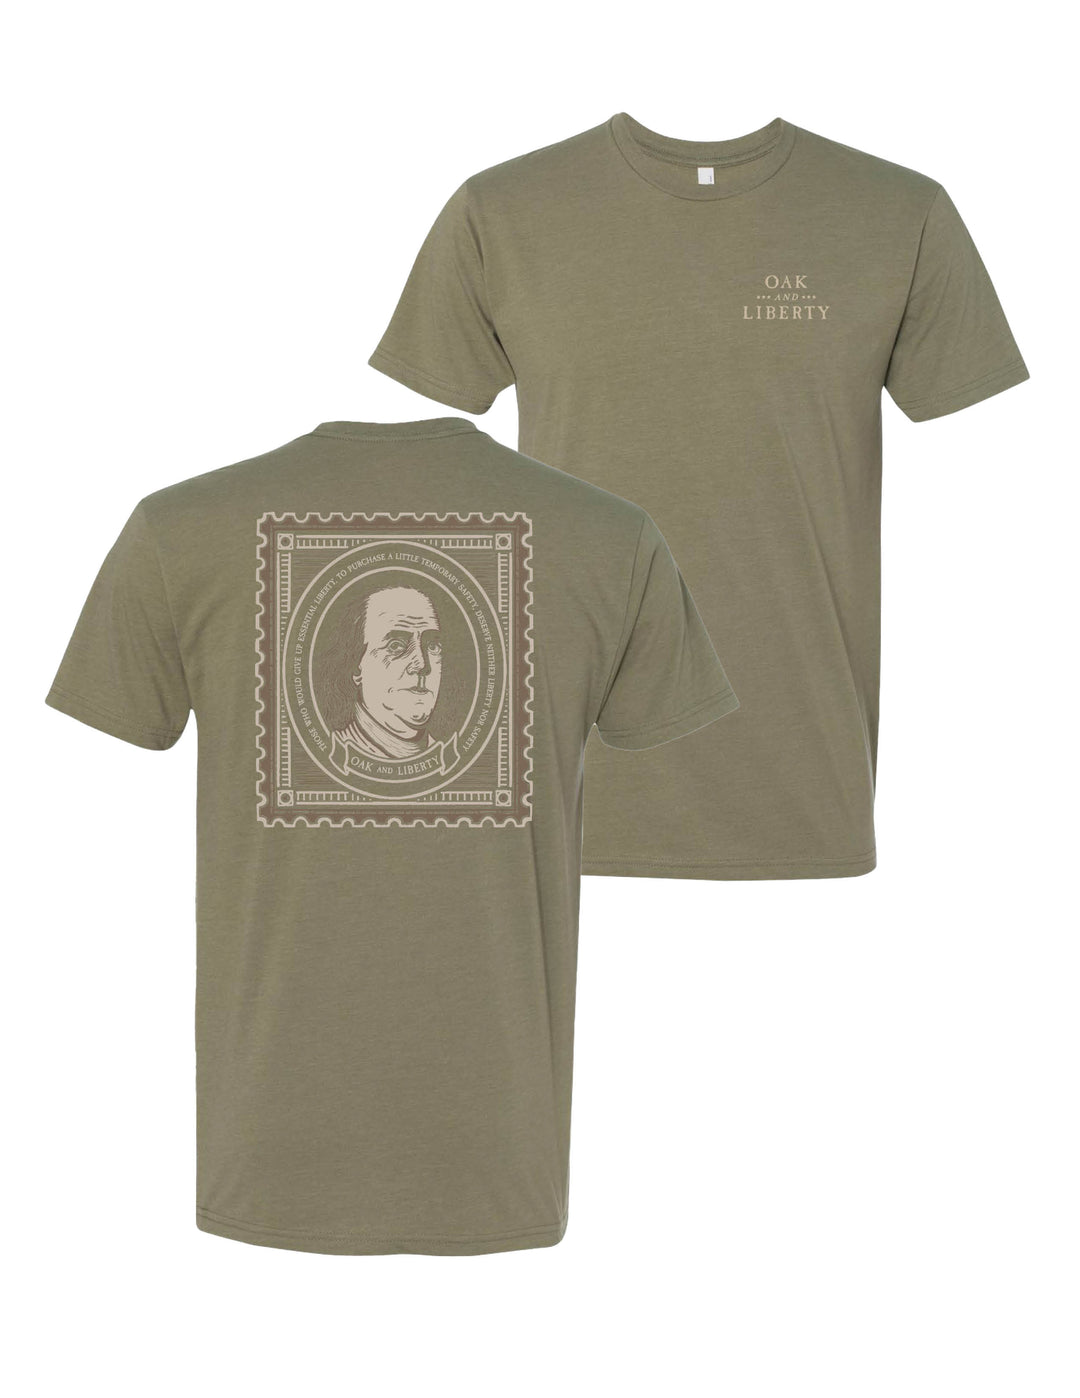 Founding Father - Ben Franklin T-Shirt